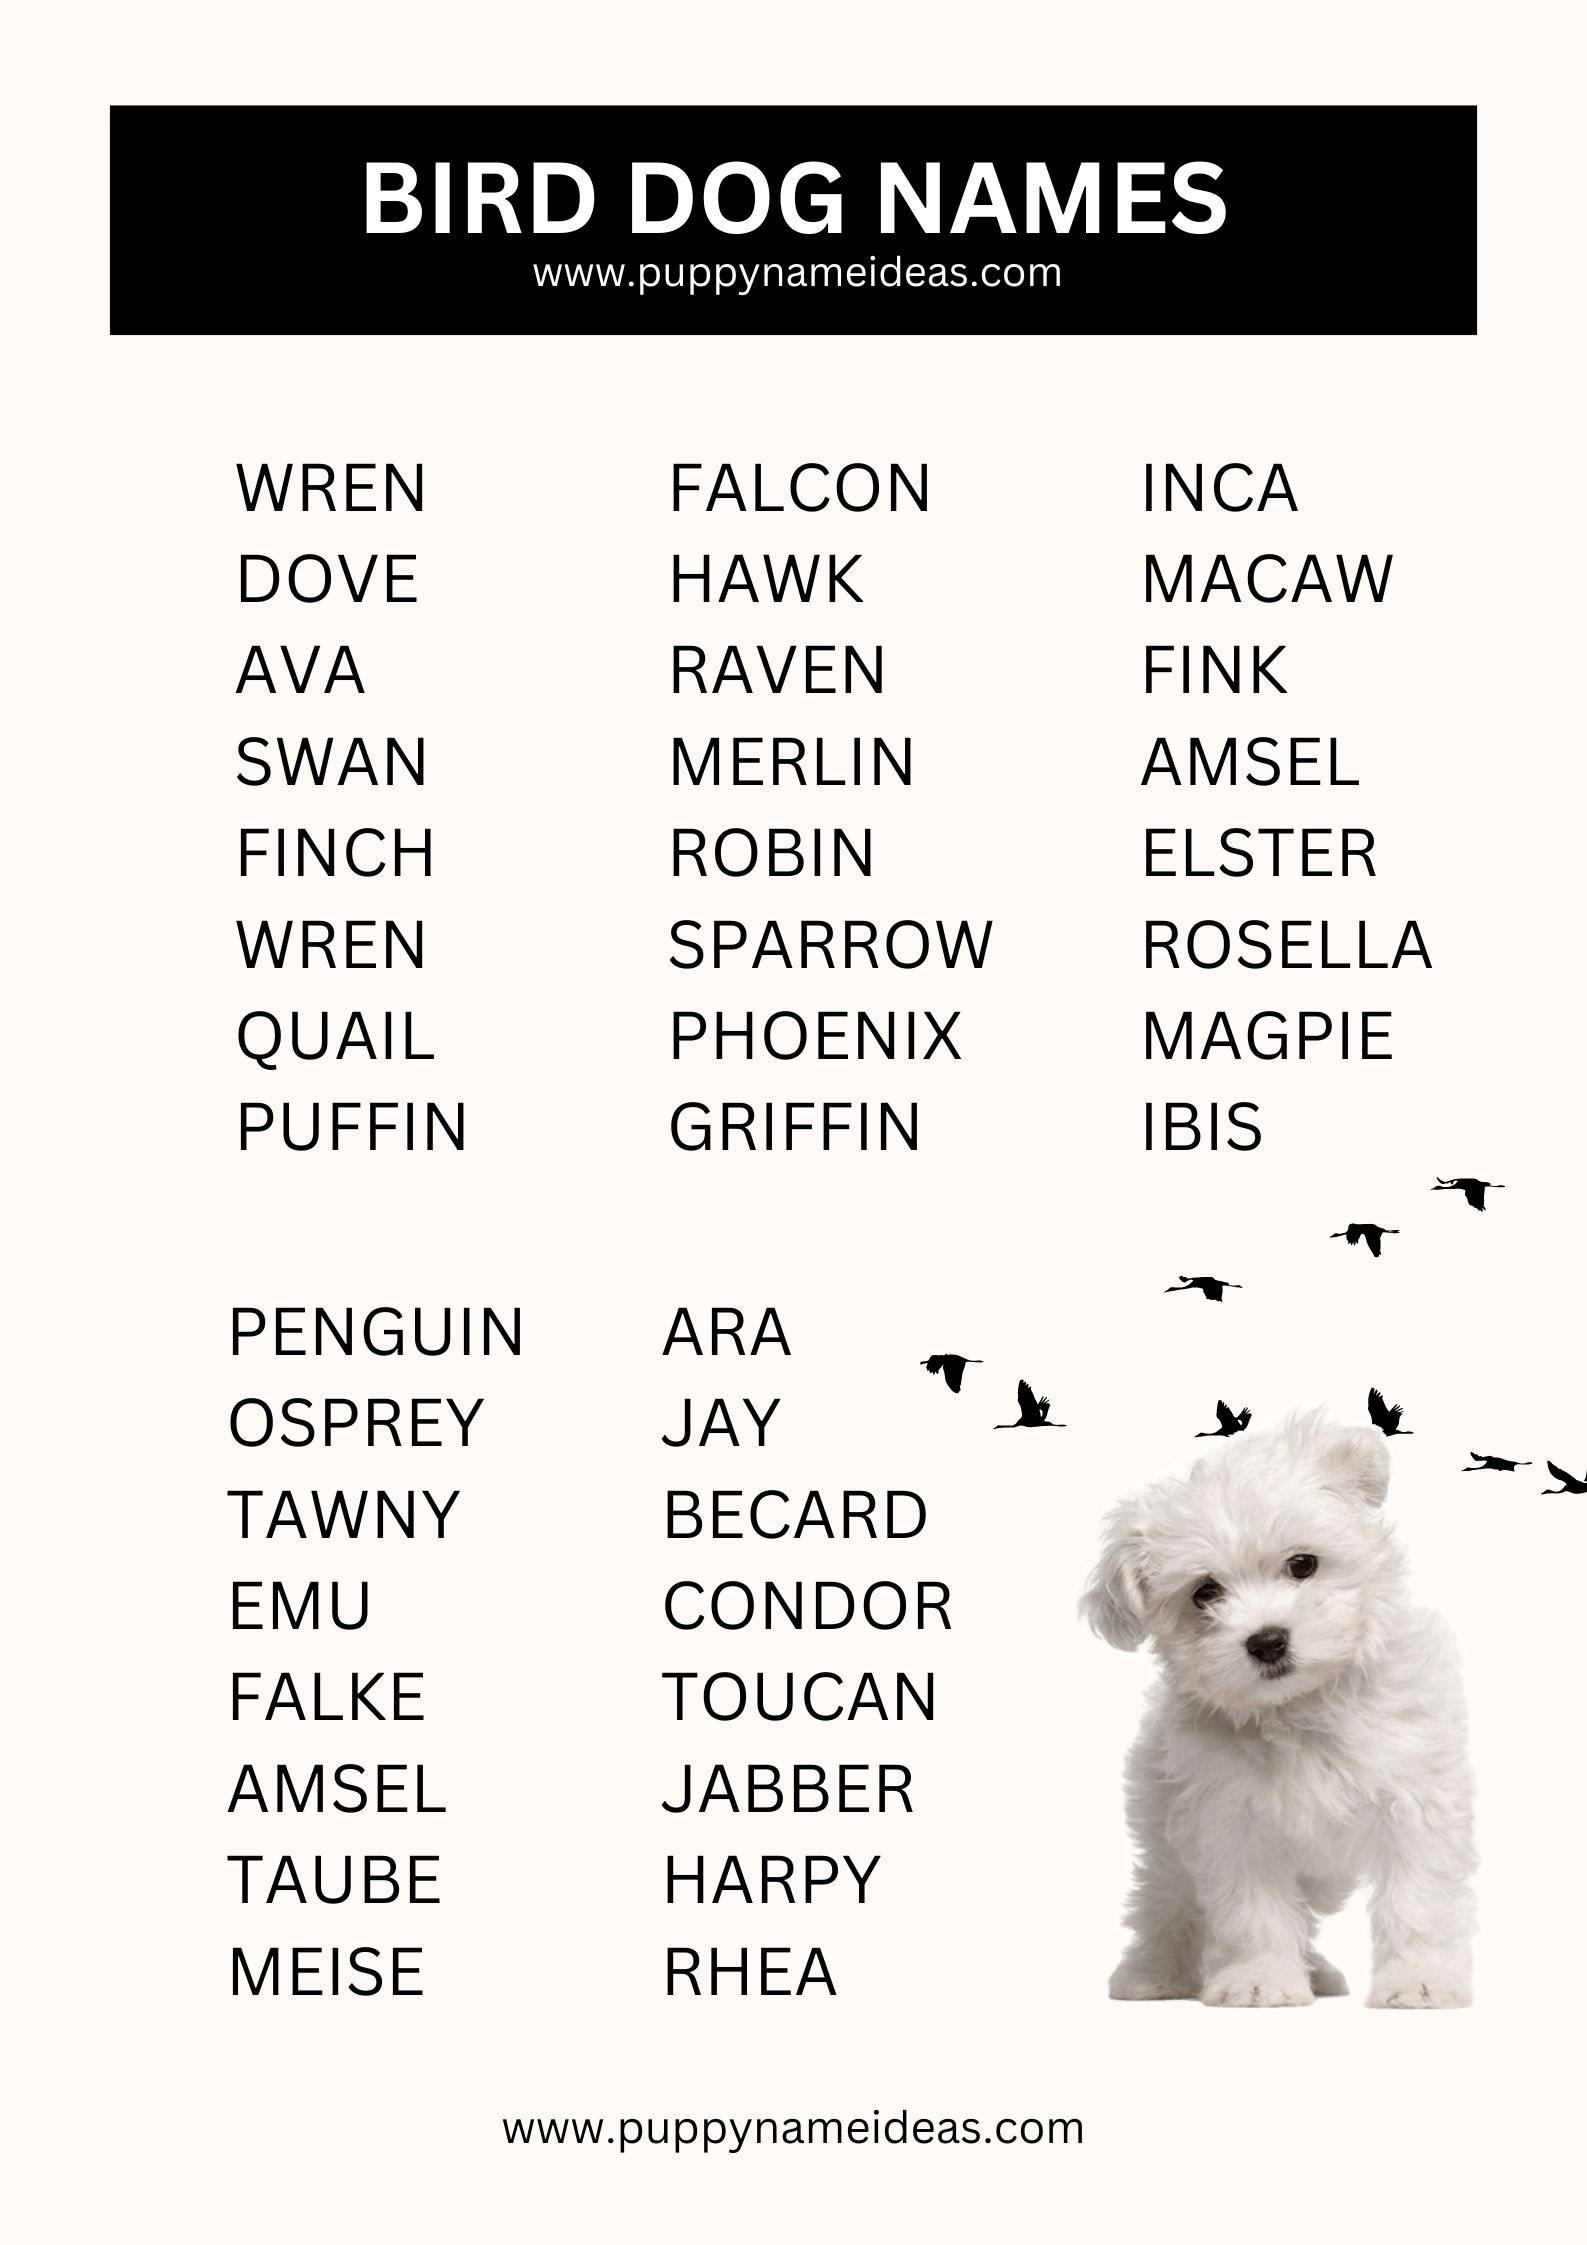 List Of Bird Dog Names